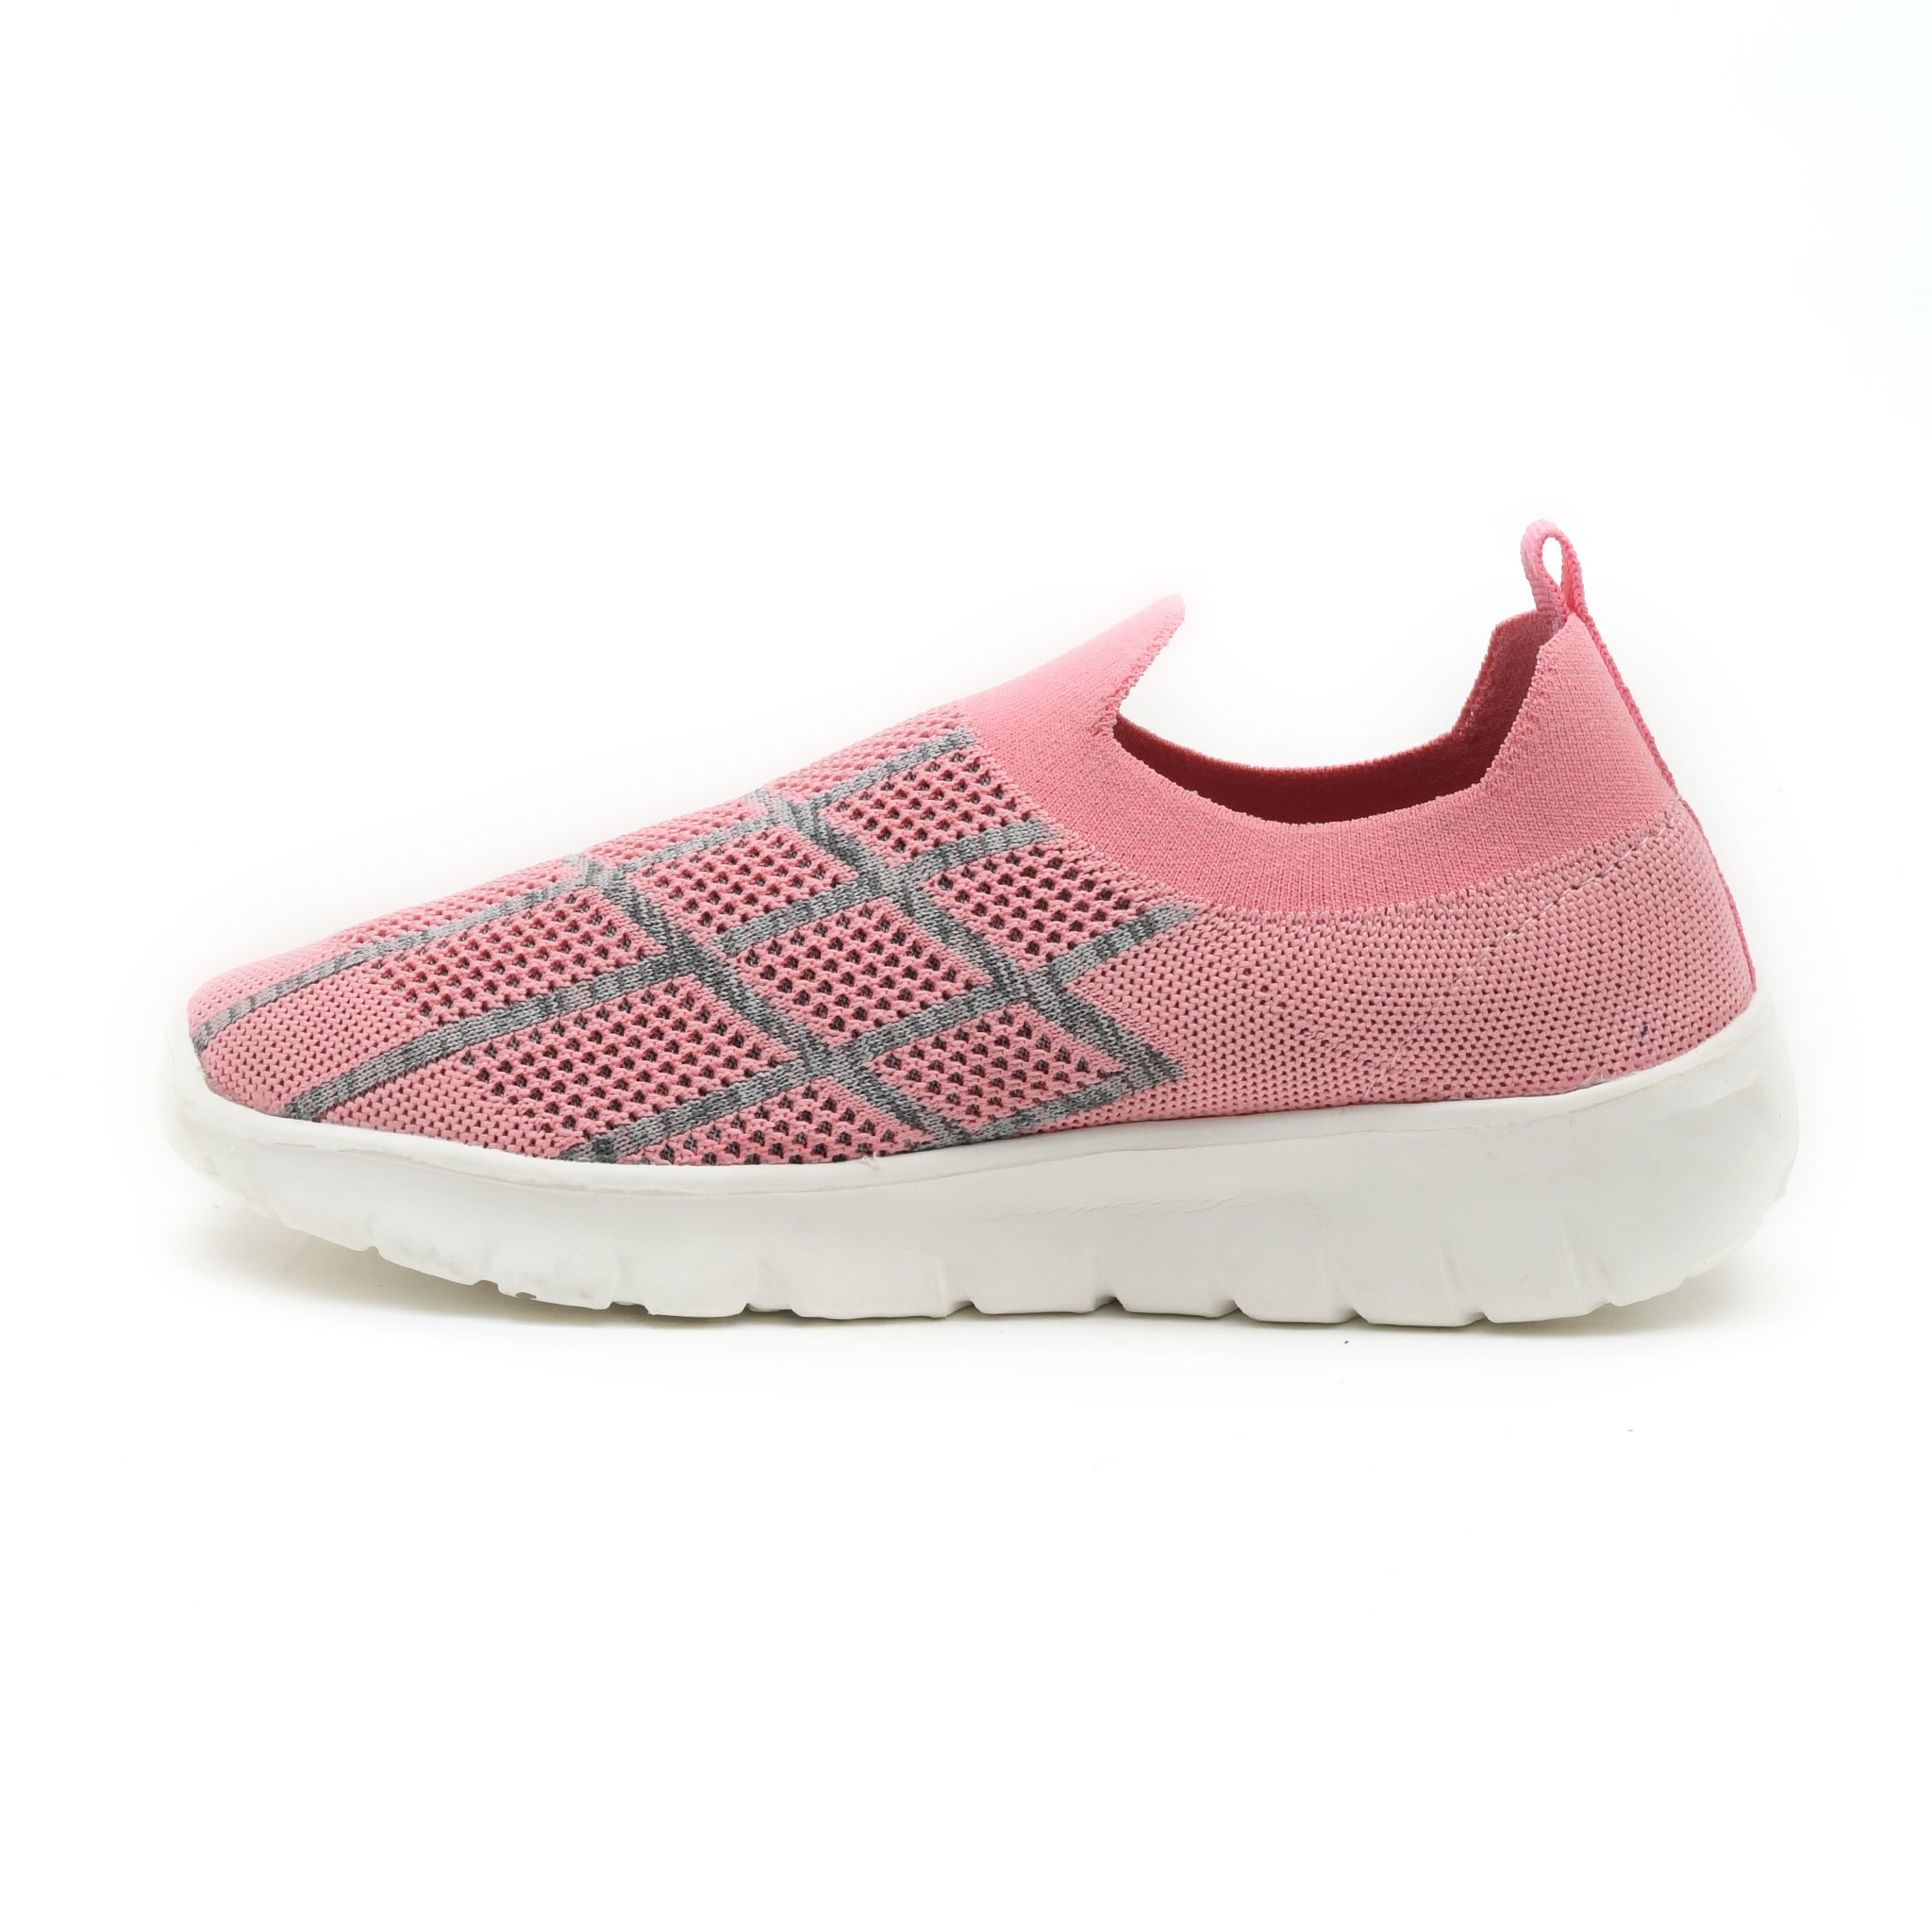 Impakto  Dream  Women's  Pink Walking Shoes